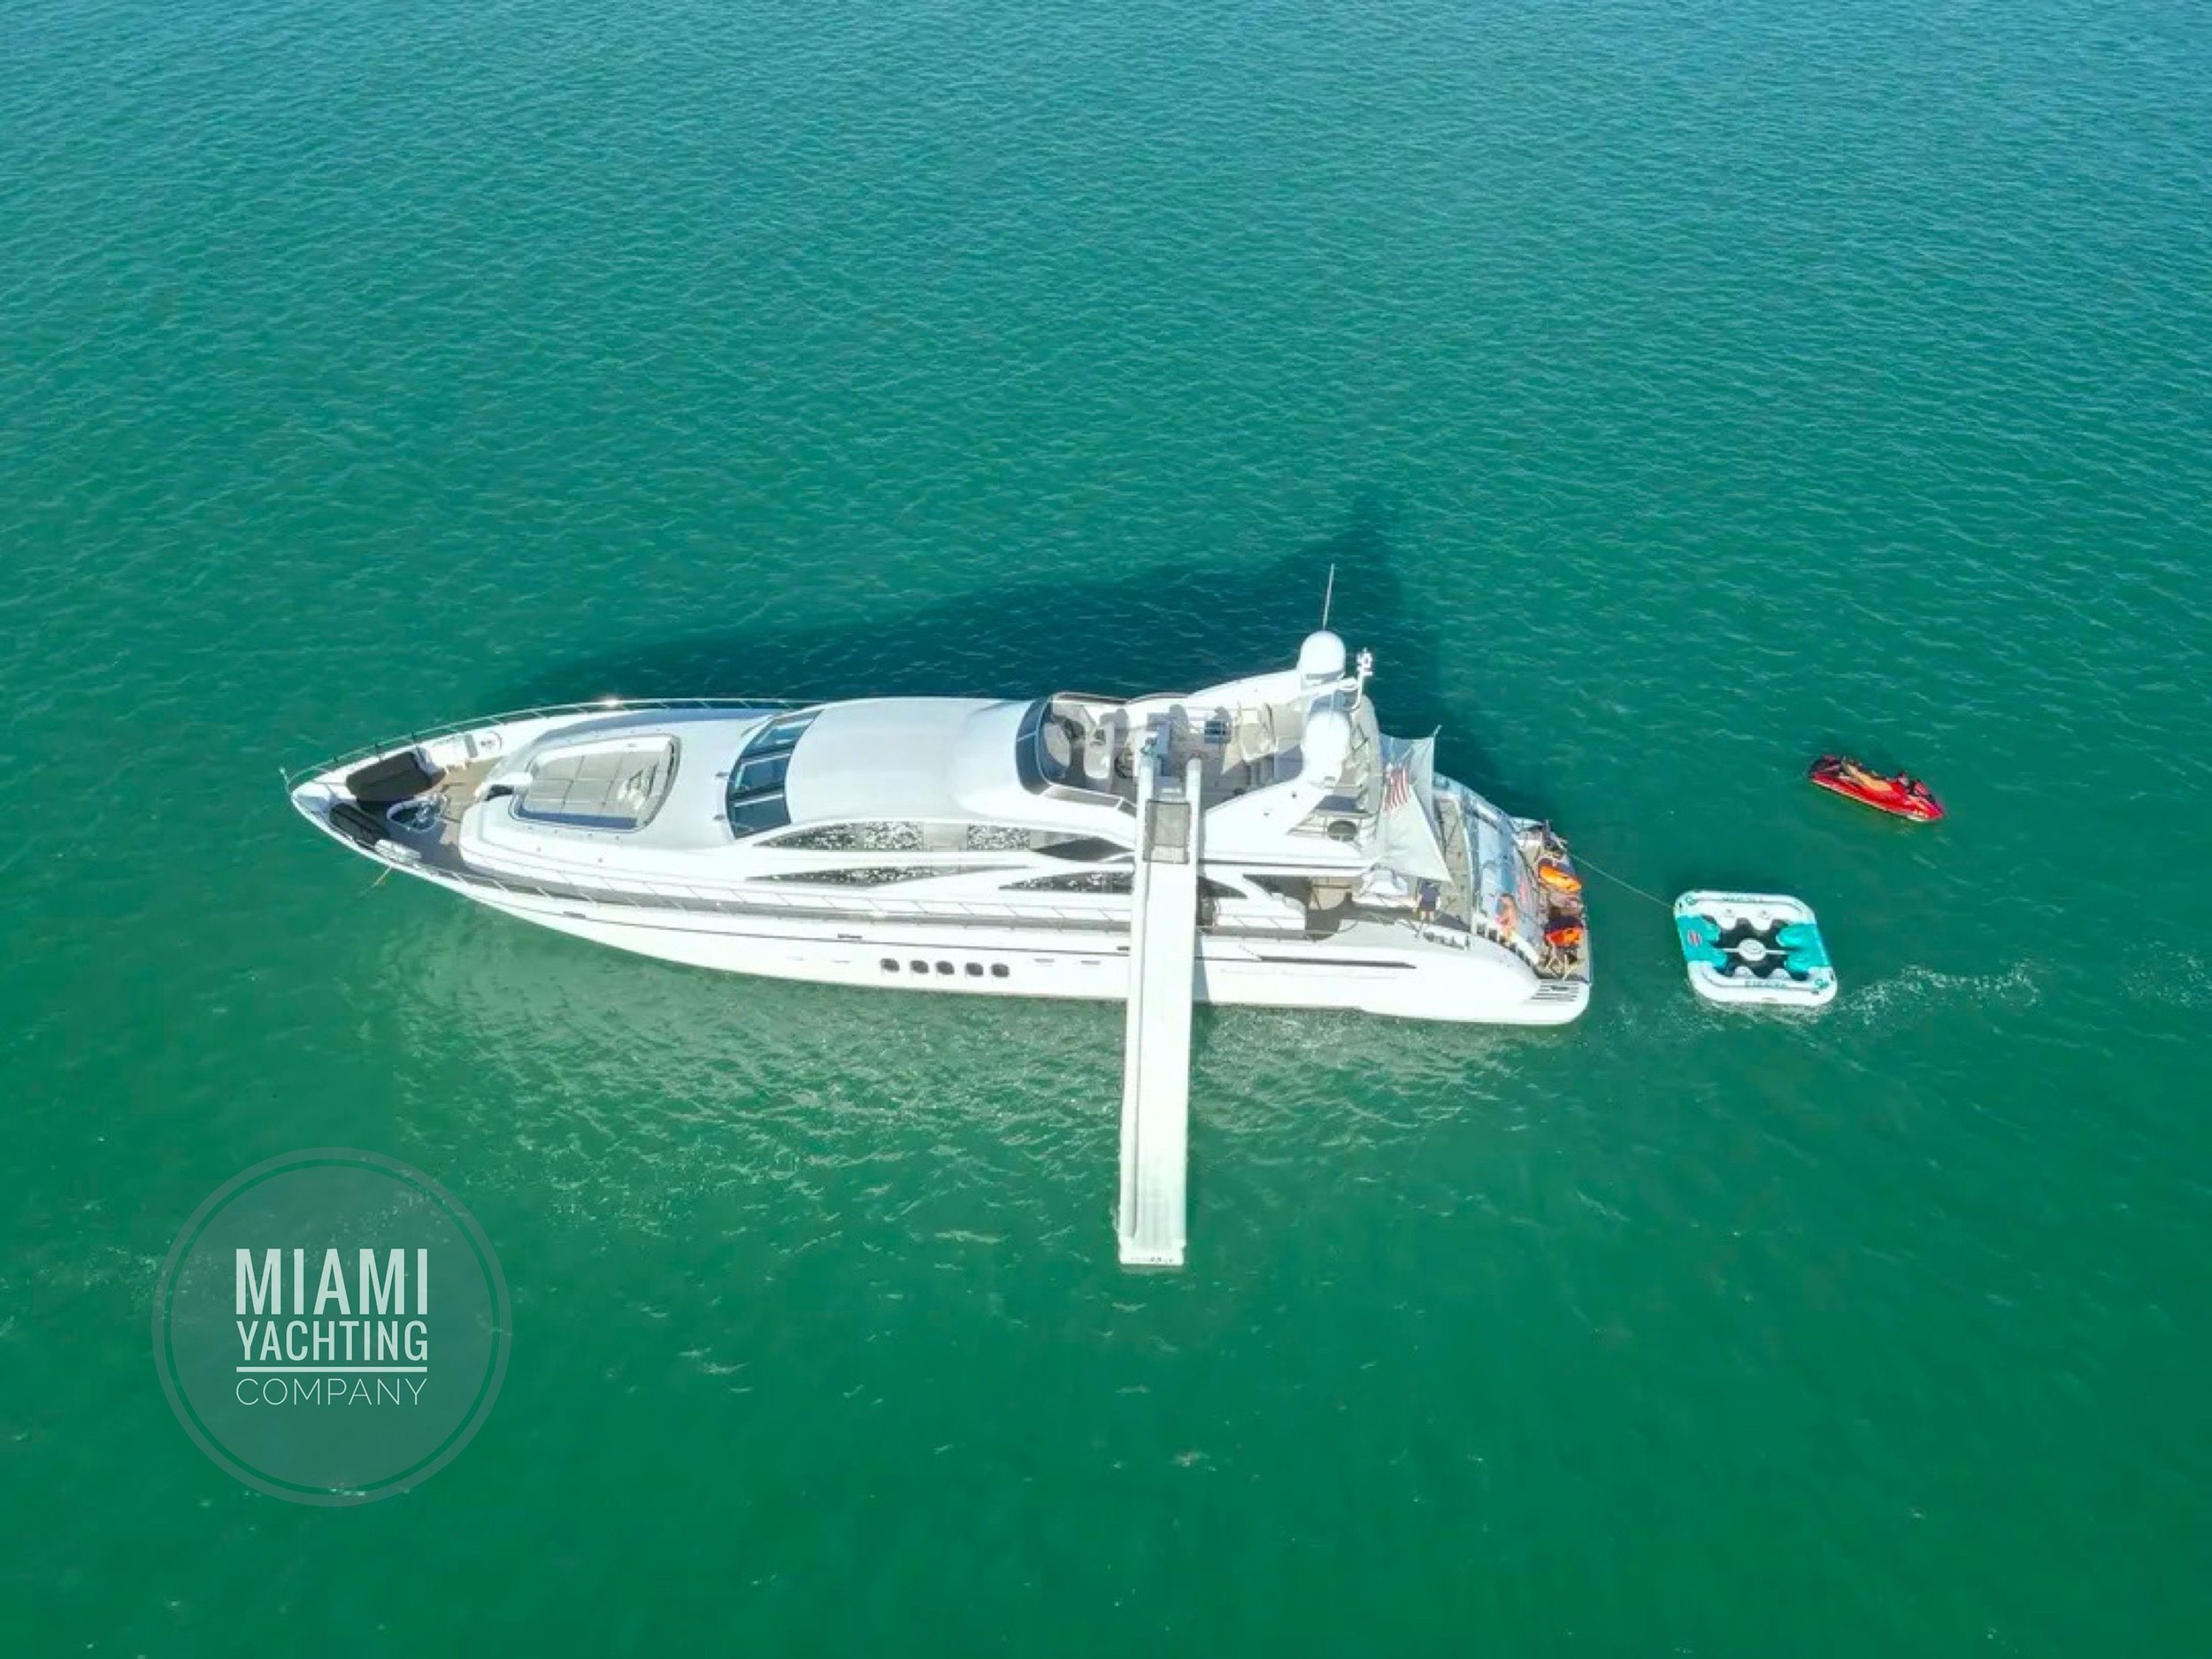 Miami_Yachting_Company_105_leopard7 copy.jpg